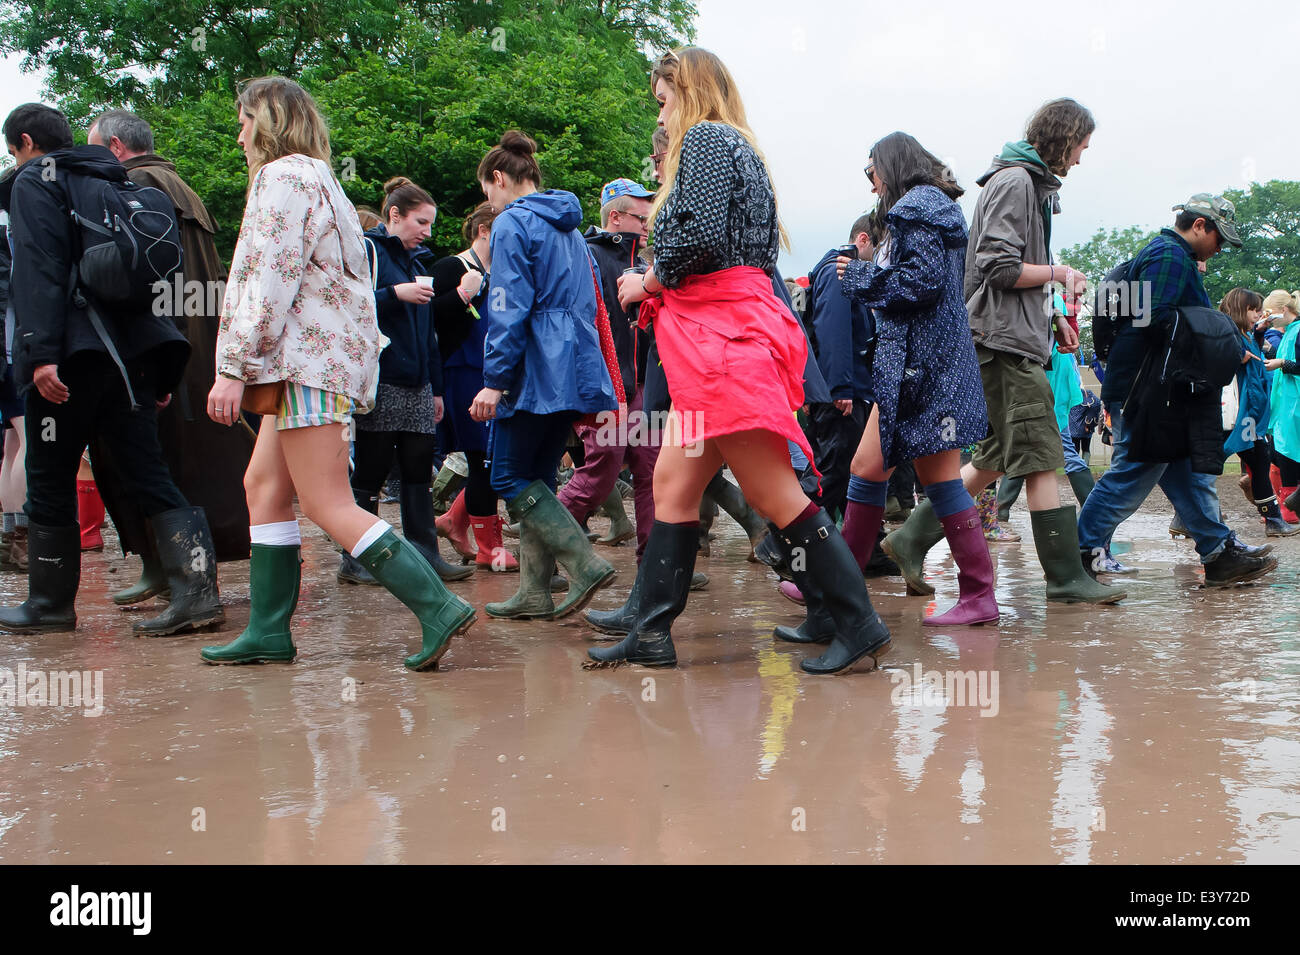 Festivalbesucher bei Regen beim Glastonbury Music Festival, England,  Freitag, 27. Juni 2014 Stockfotografie - Alamy